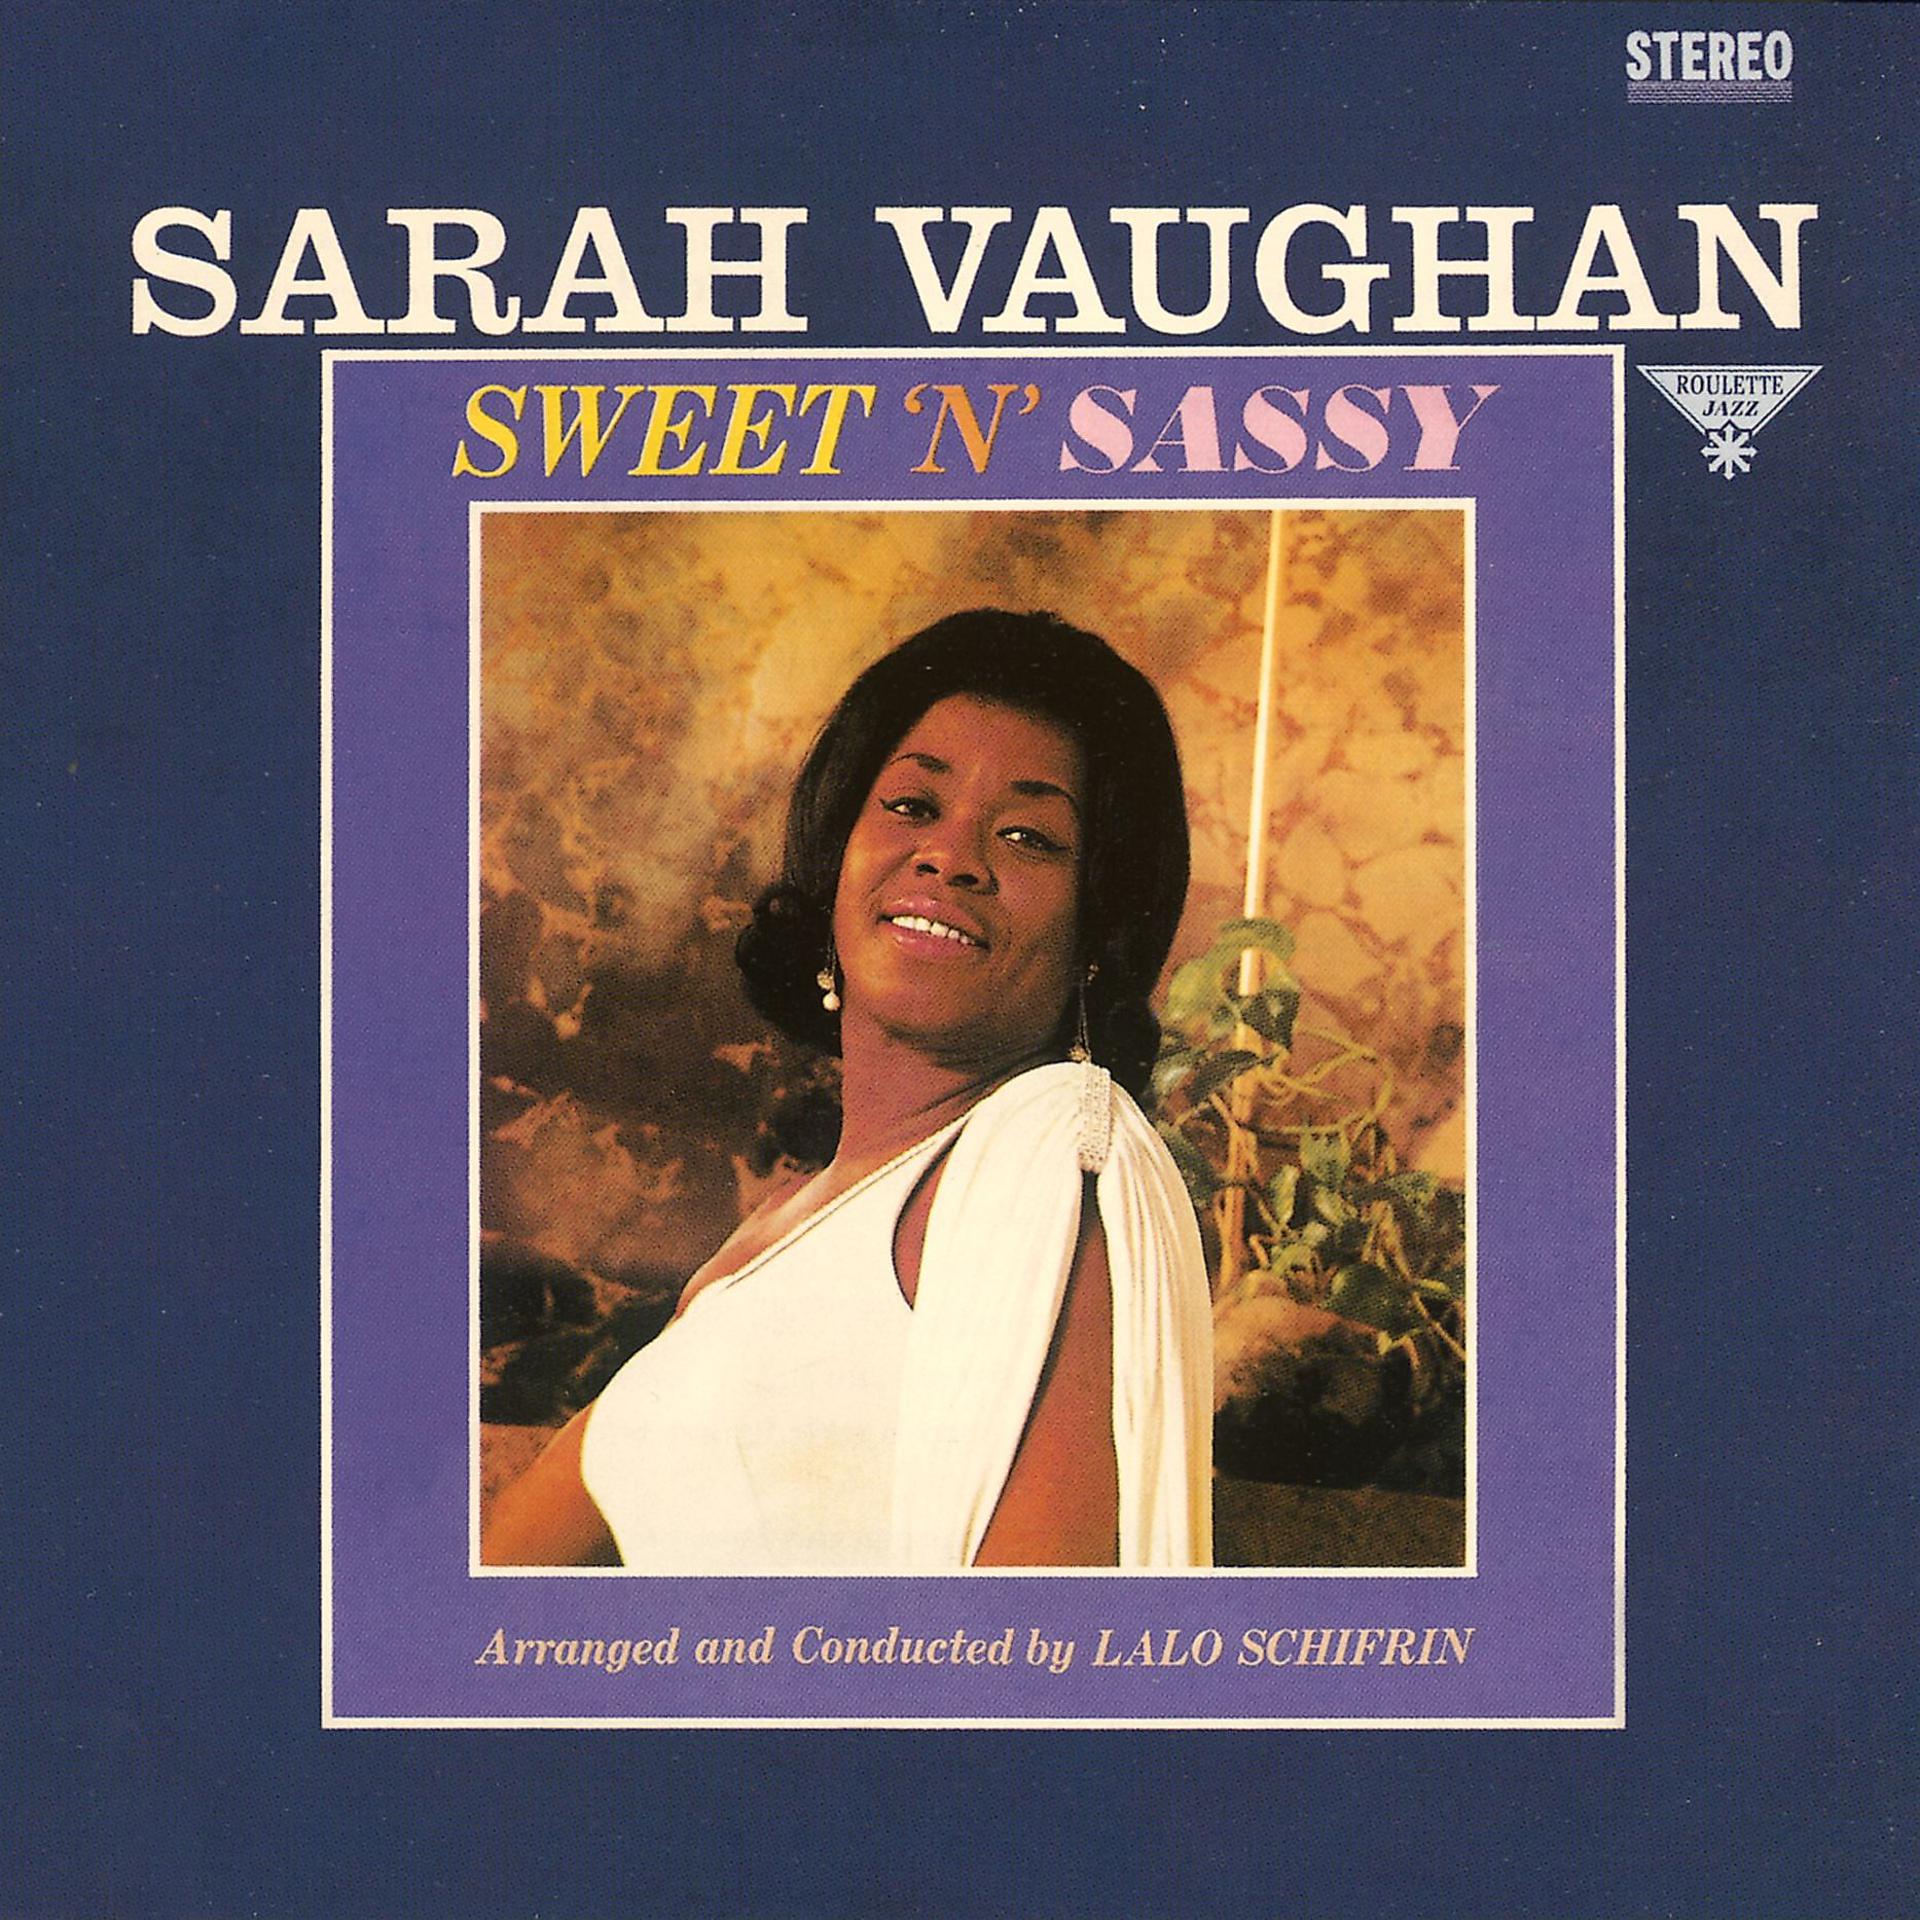 Постер к треку Sarah Vaughan - Come Spring (2001 Remaster)